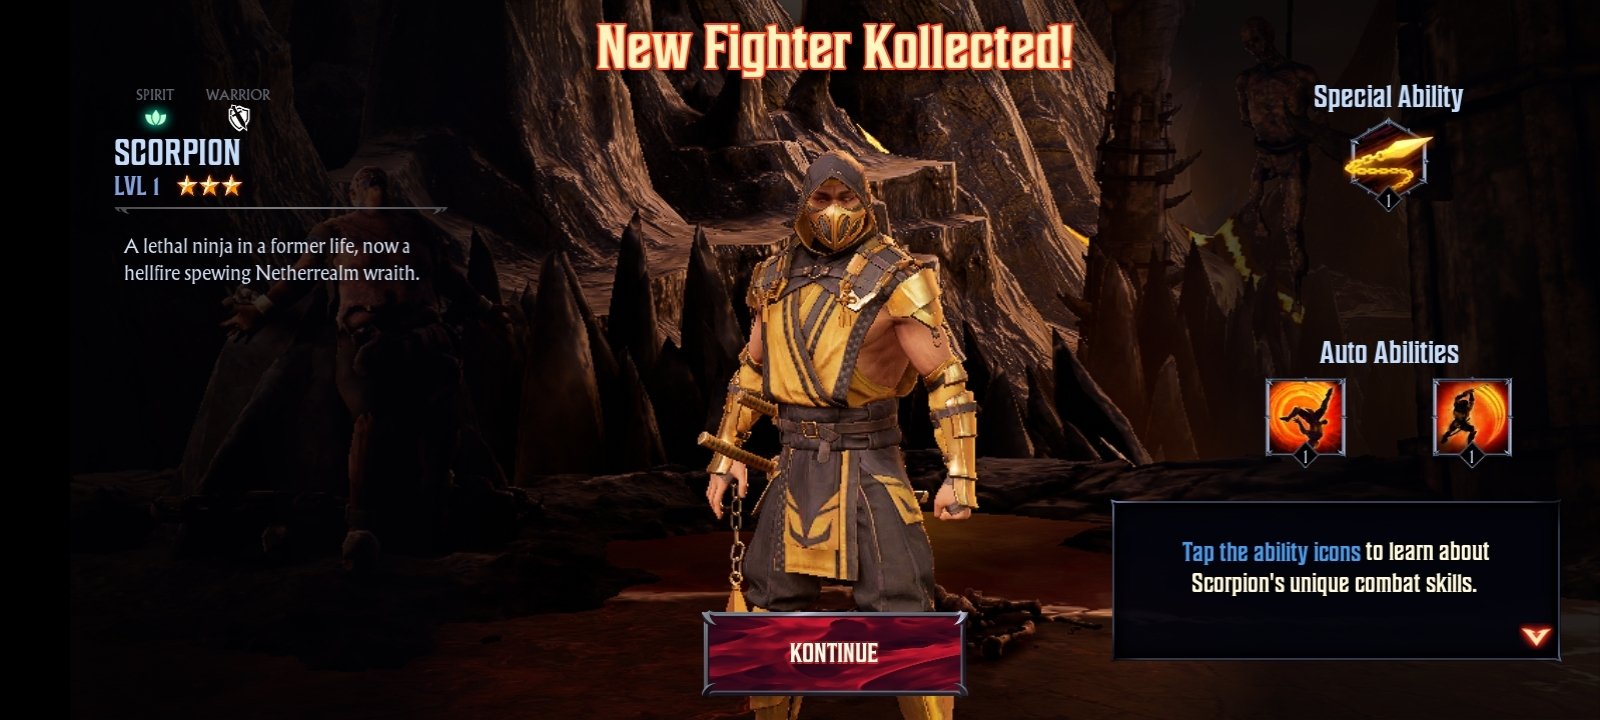 Mortal Kombat Onslaught Mobile: Everything We Know